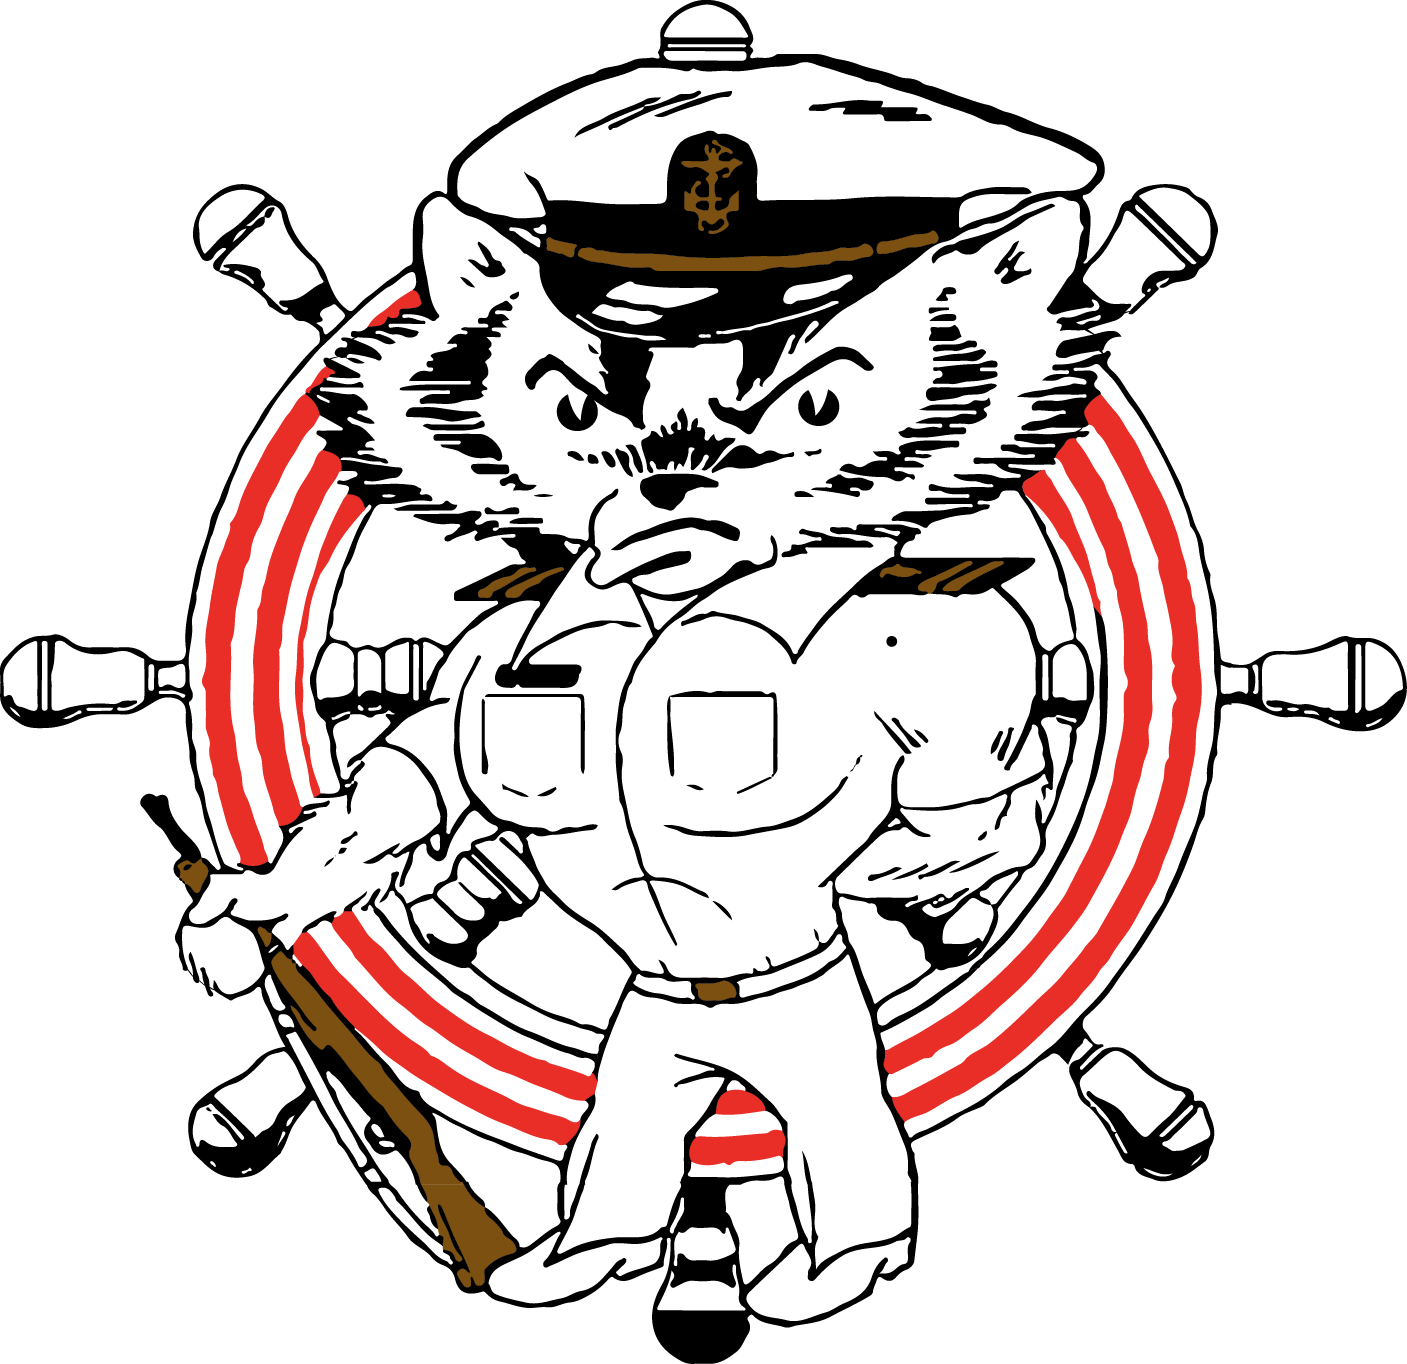 University of Wisconsin Naval ROTC Alumni Association